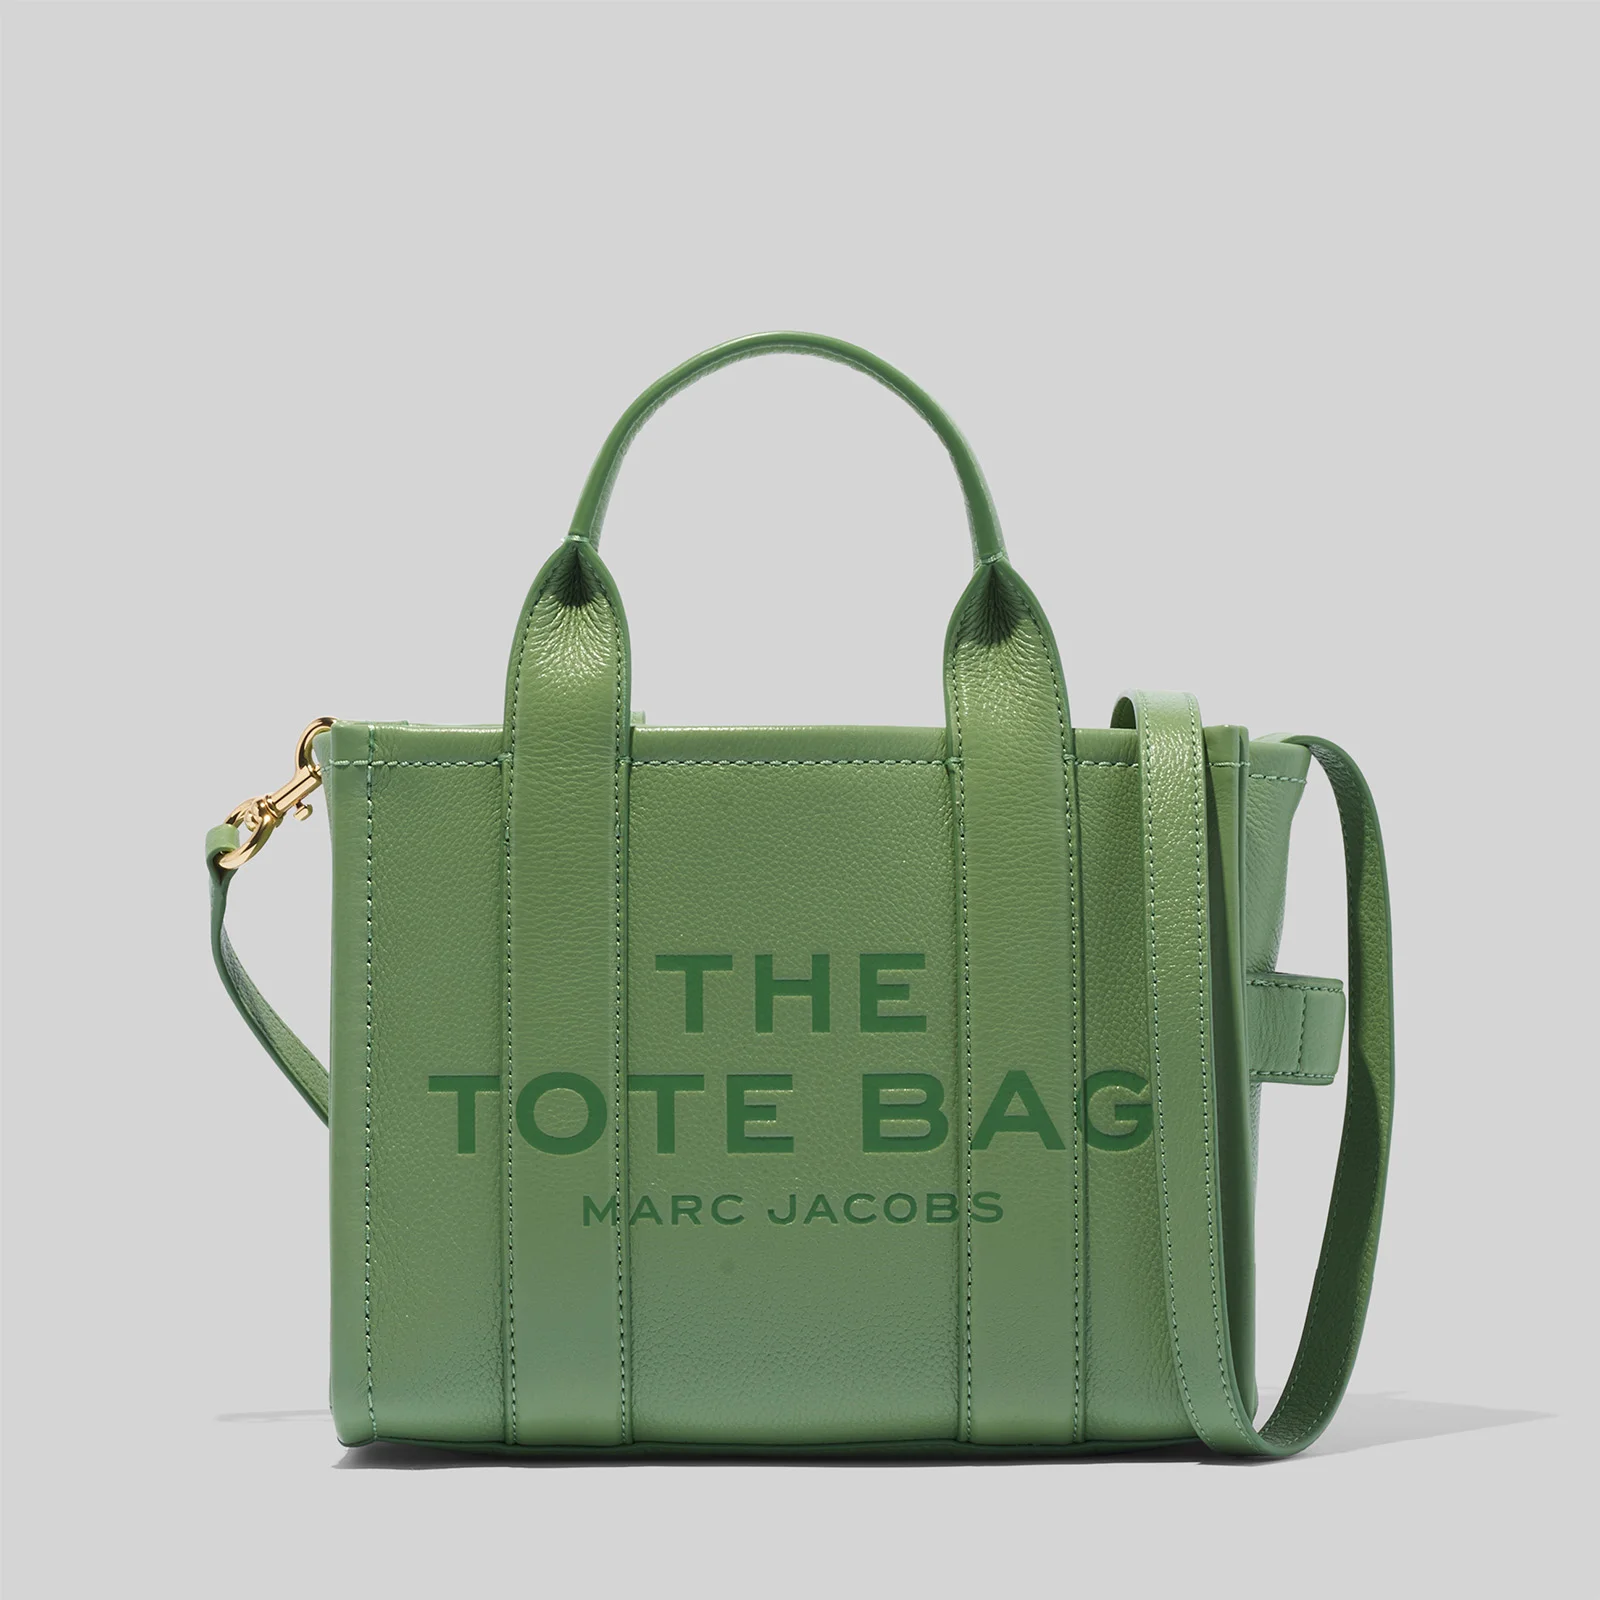 Marc Jacobs Women's The Mini Leather Tote Bag - Aspen Green Image 1